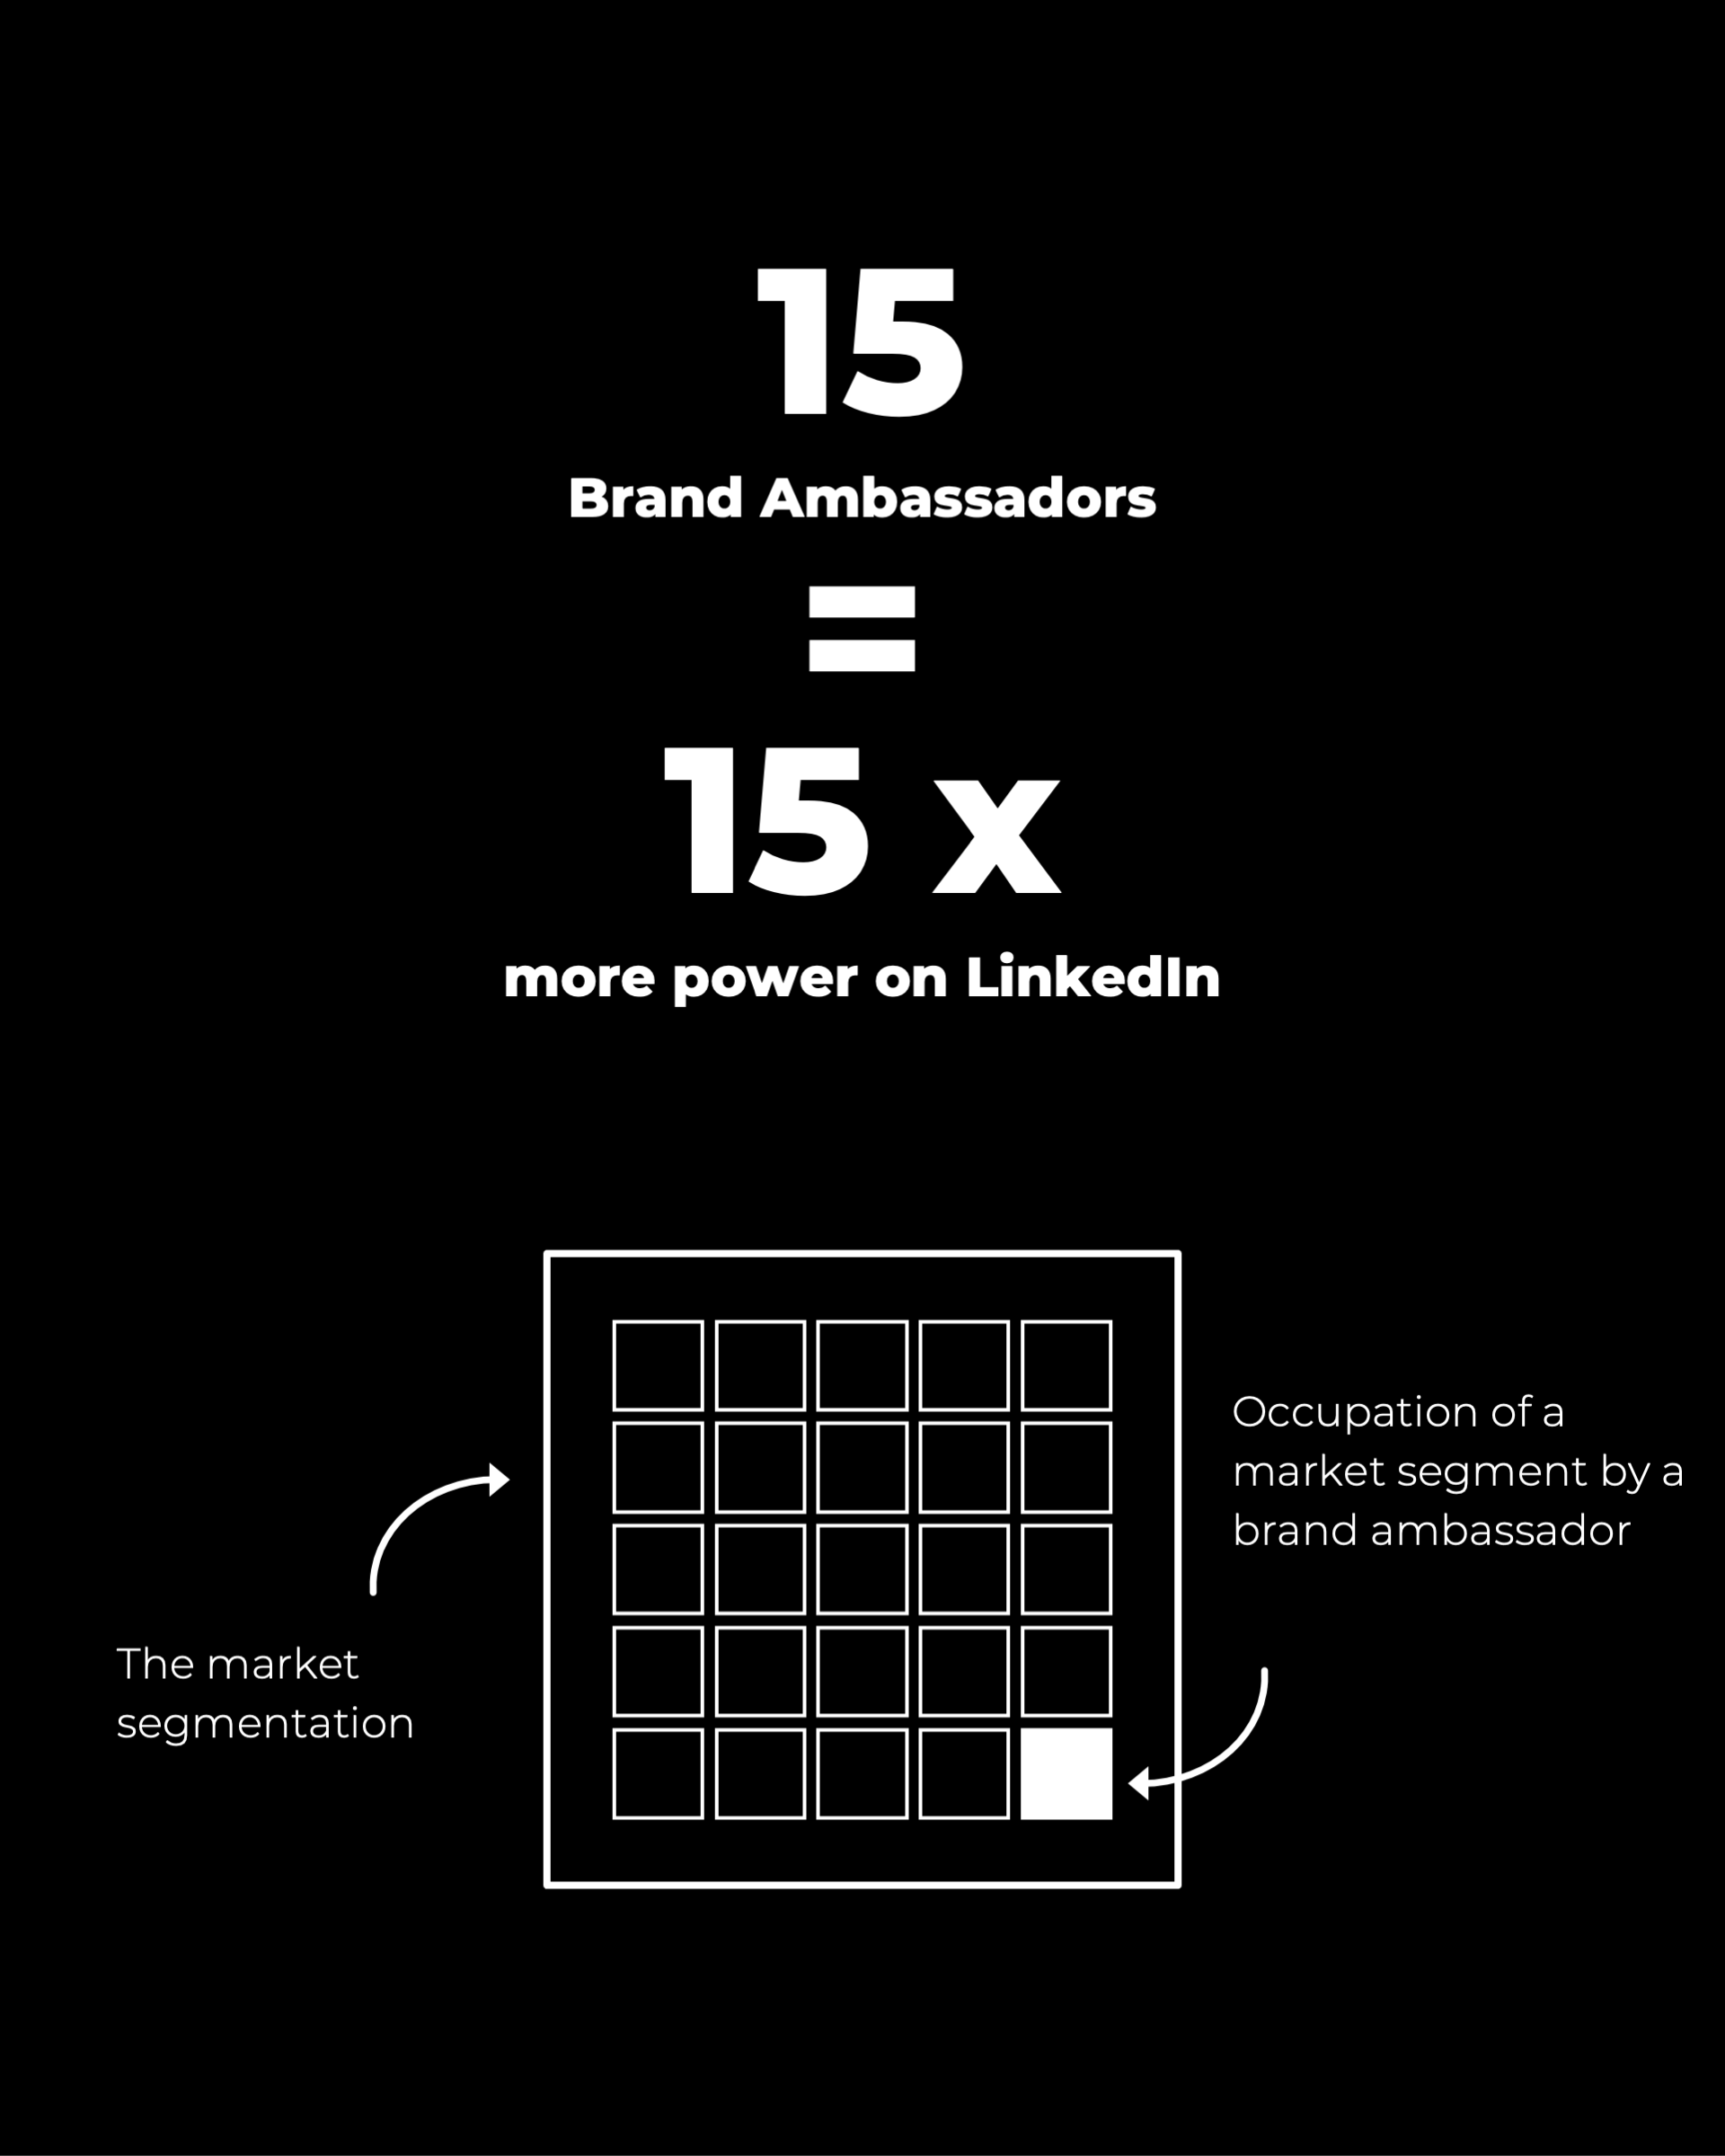 market segmentation reach more people through brand ambassadors